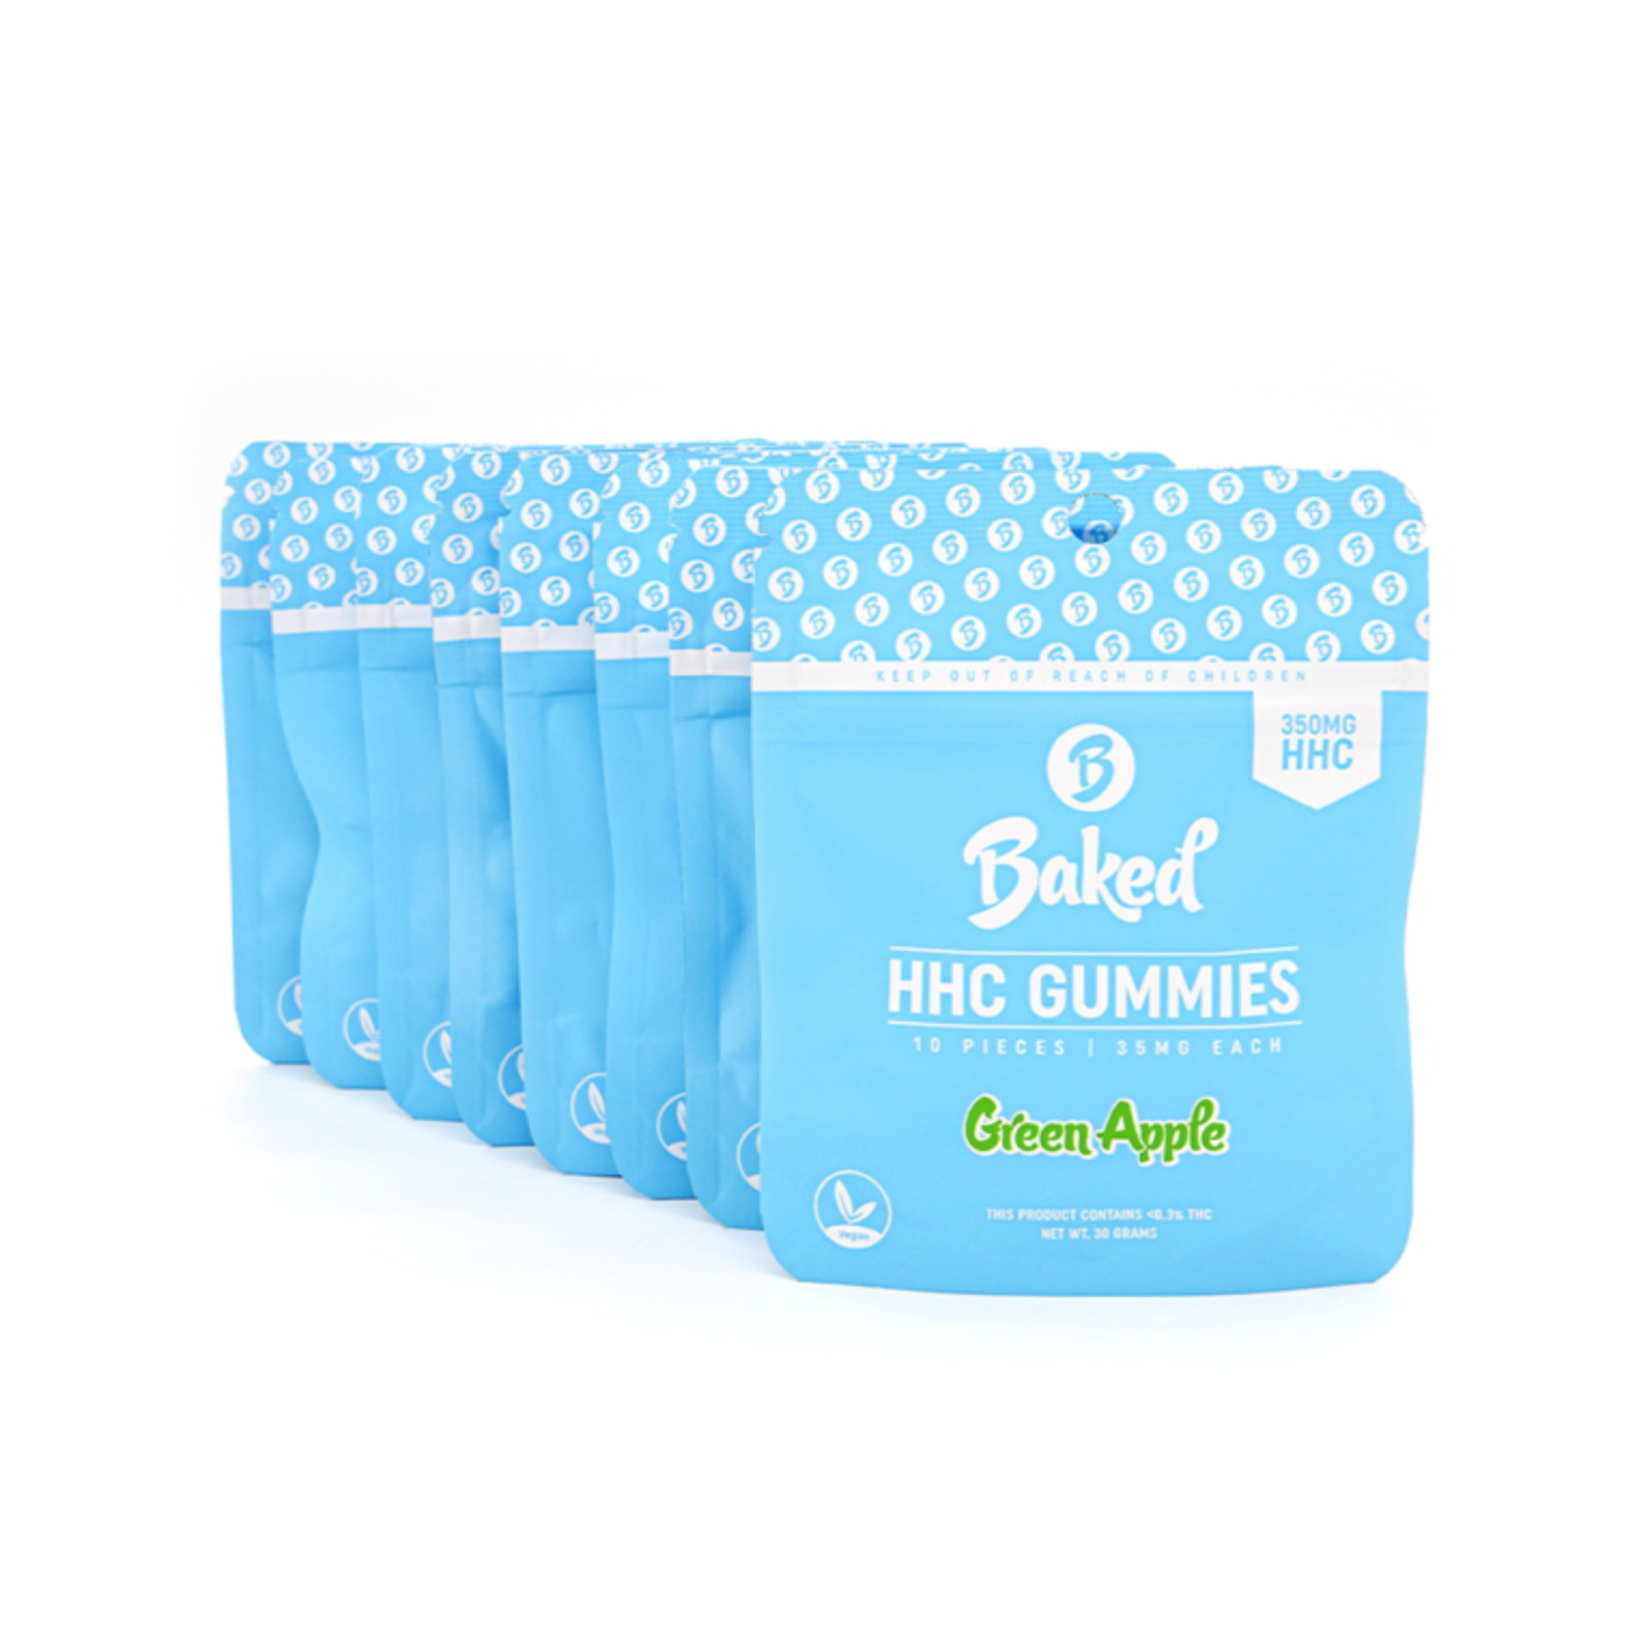 Baked HHC Gummies 10pc / 35mg ea